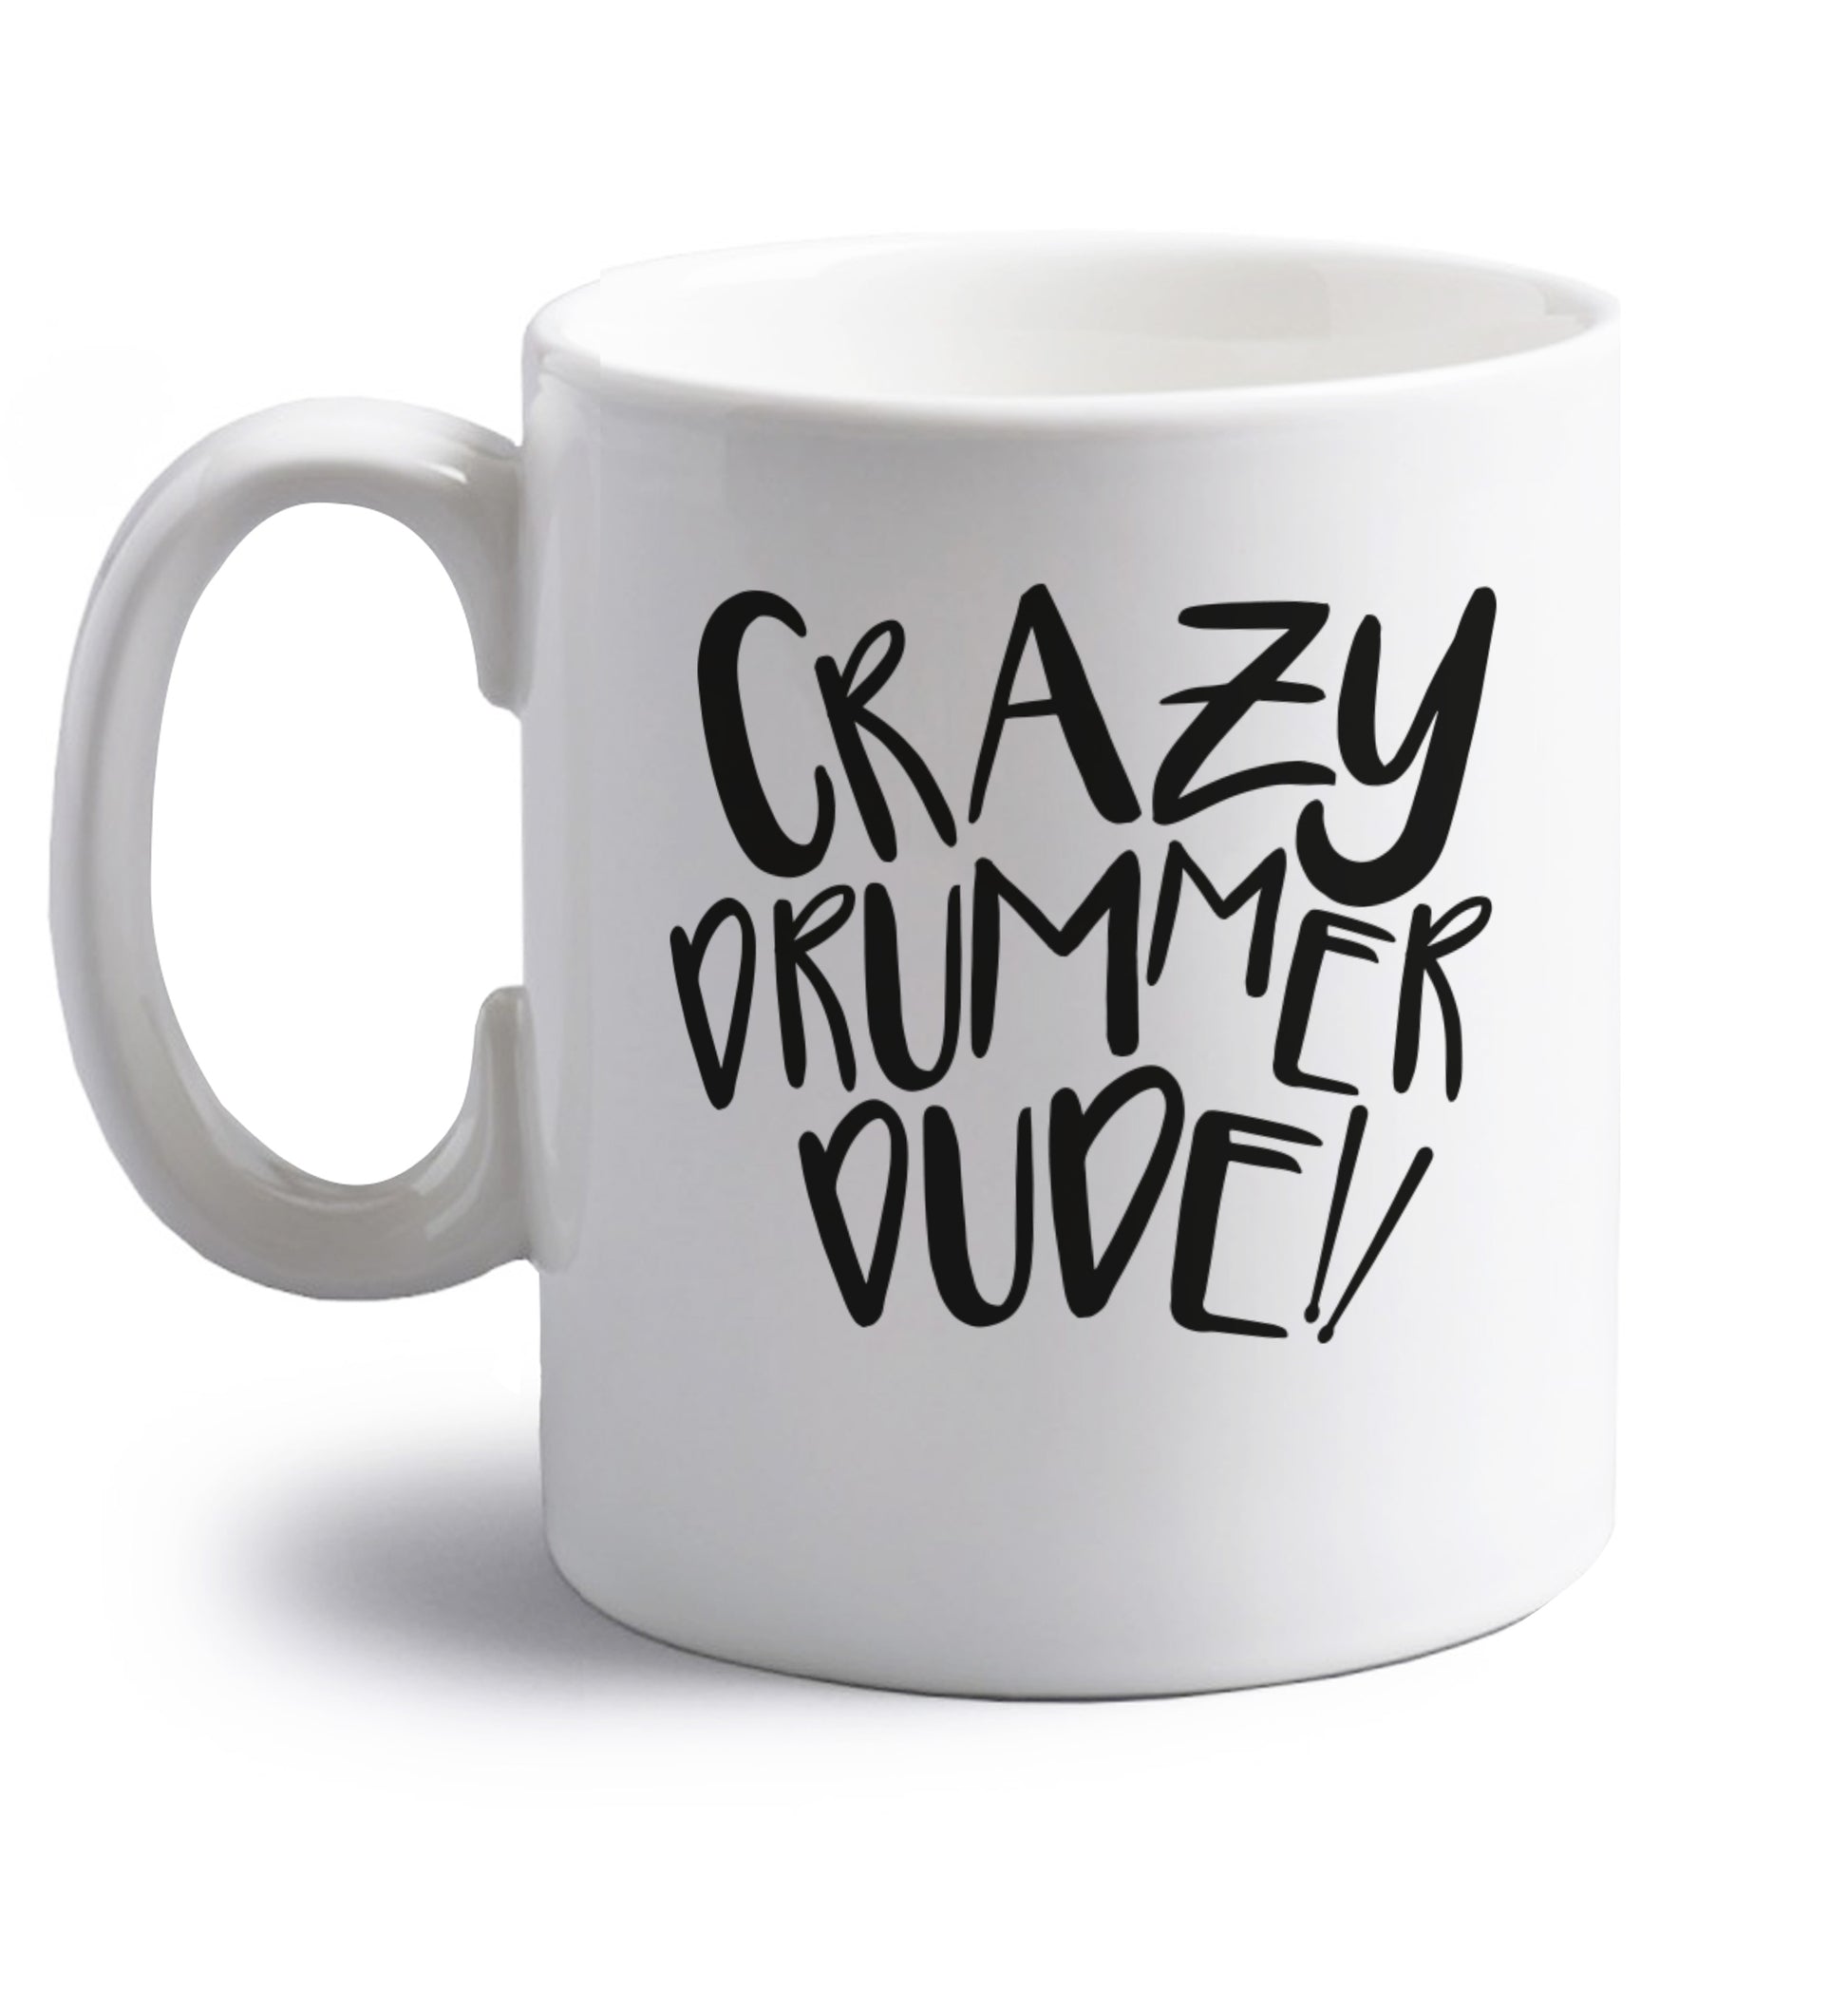 Crazy drummer dude right handed white ceramic mug 